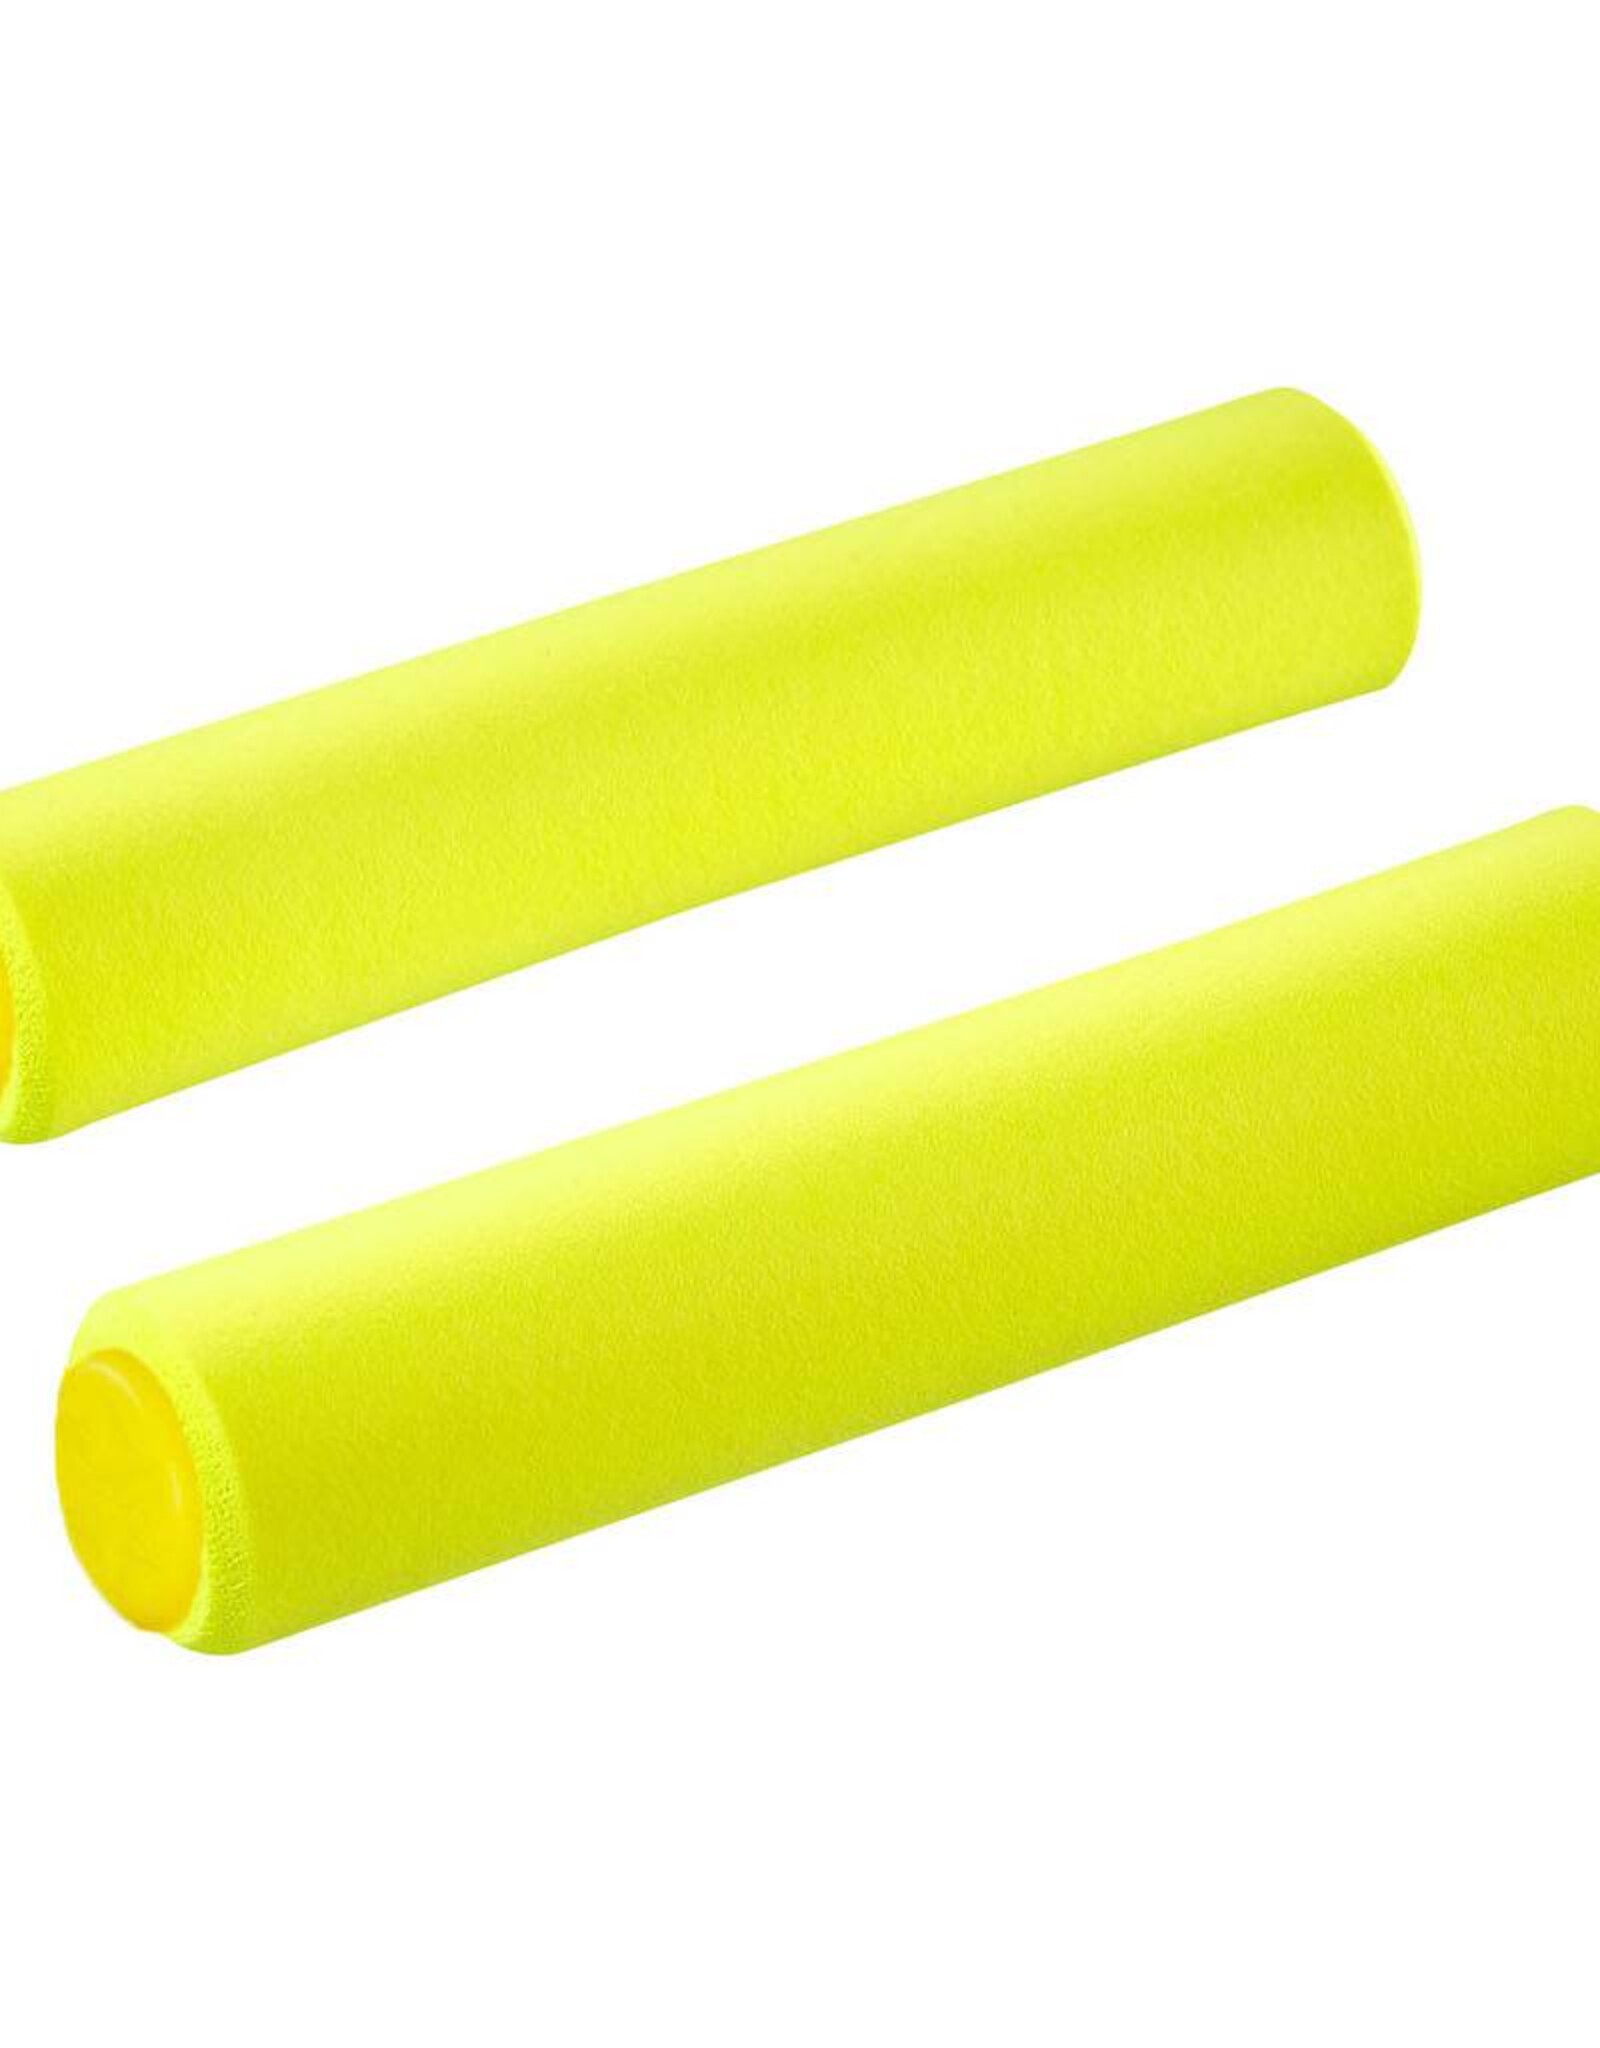 Supacaz Siliconez - Neon Yellow XL